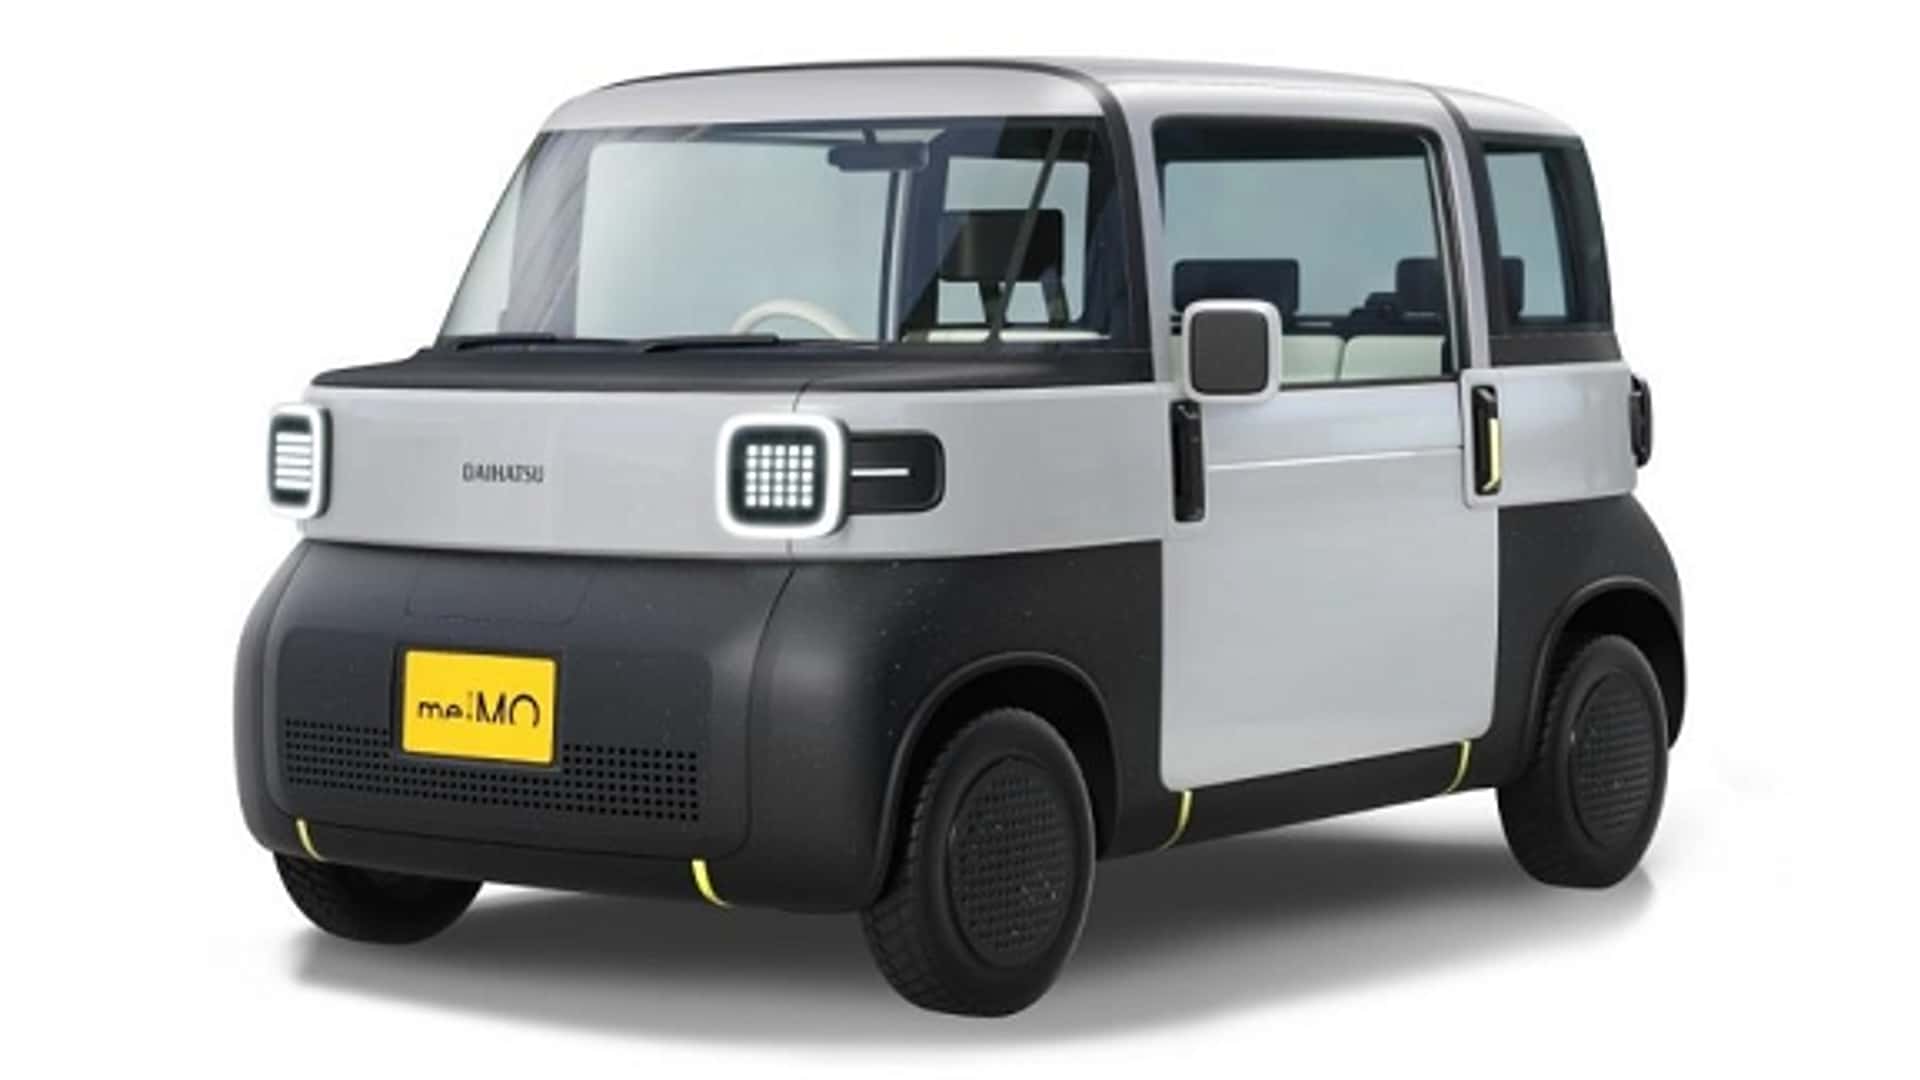 daihatsu set to showcase electric lineup at japan mobility show